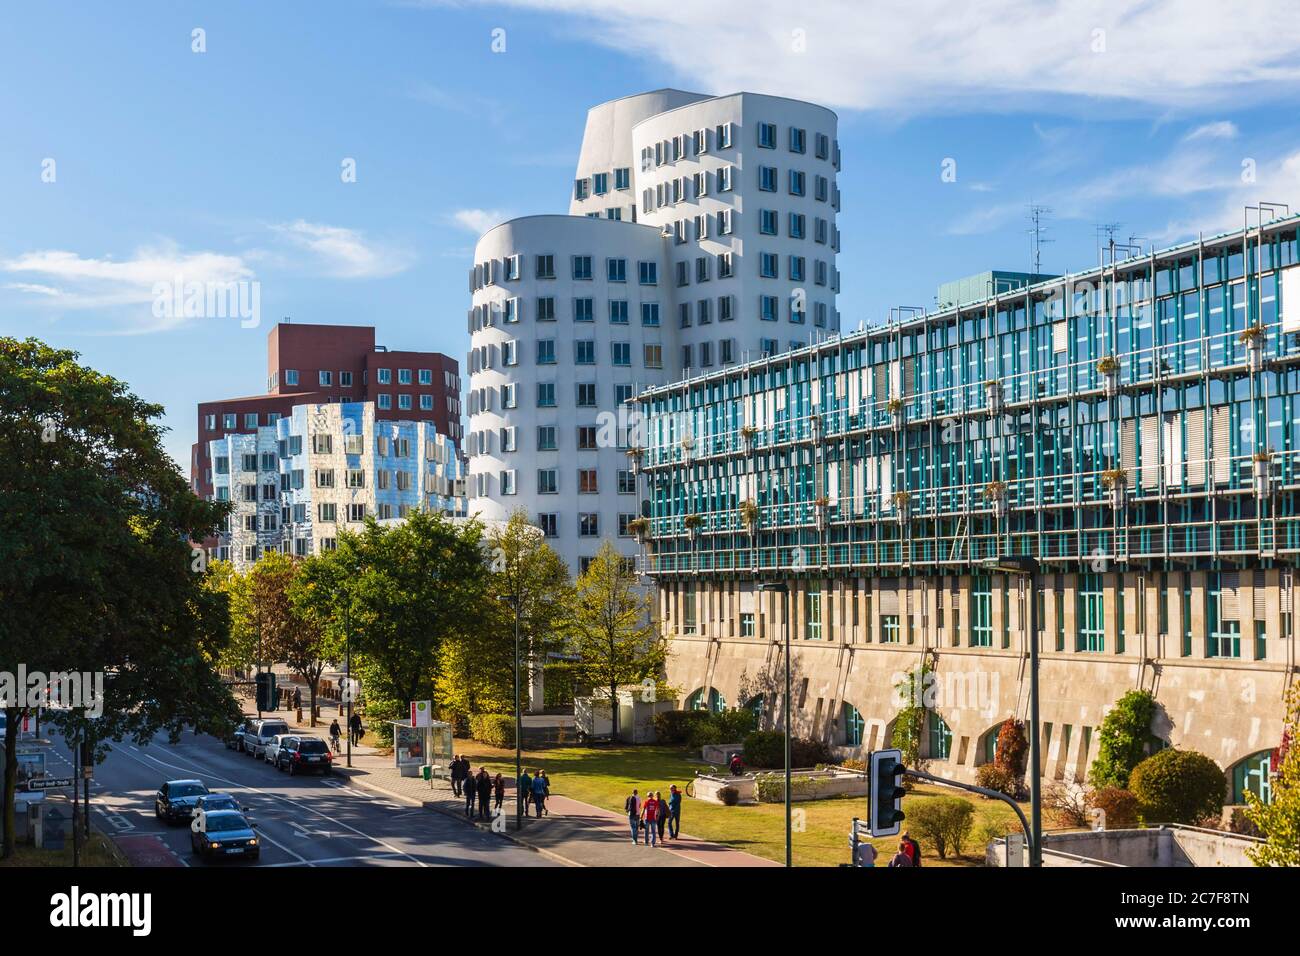 WDR State Studio, Architekt parade architekten, Gehry Bauten, Media Harbour, Duesseldorf, North Rhine-Westphalia, Germany Stock Photo